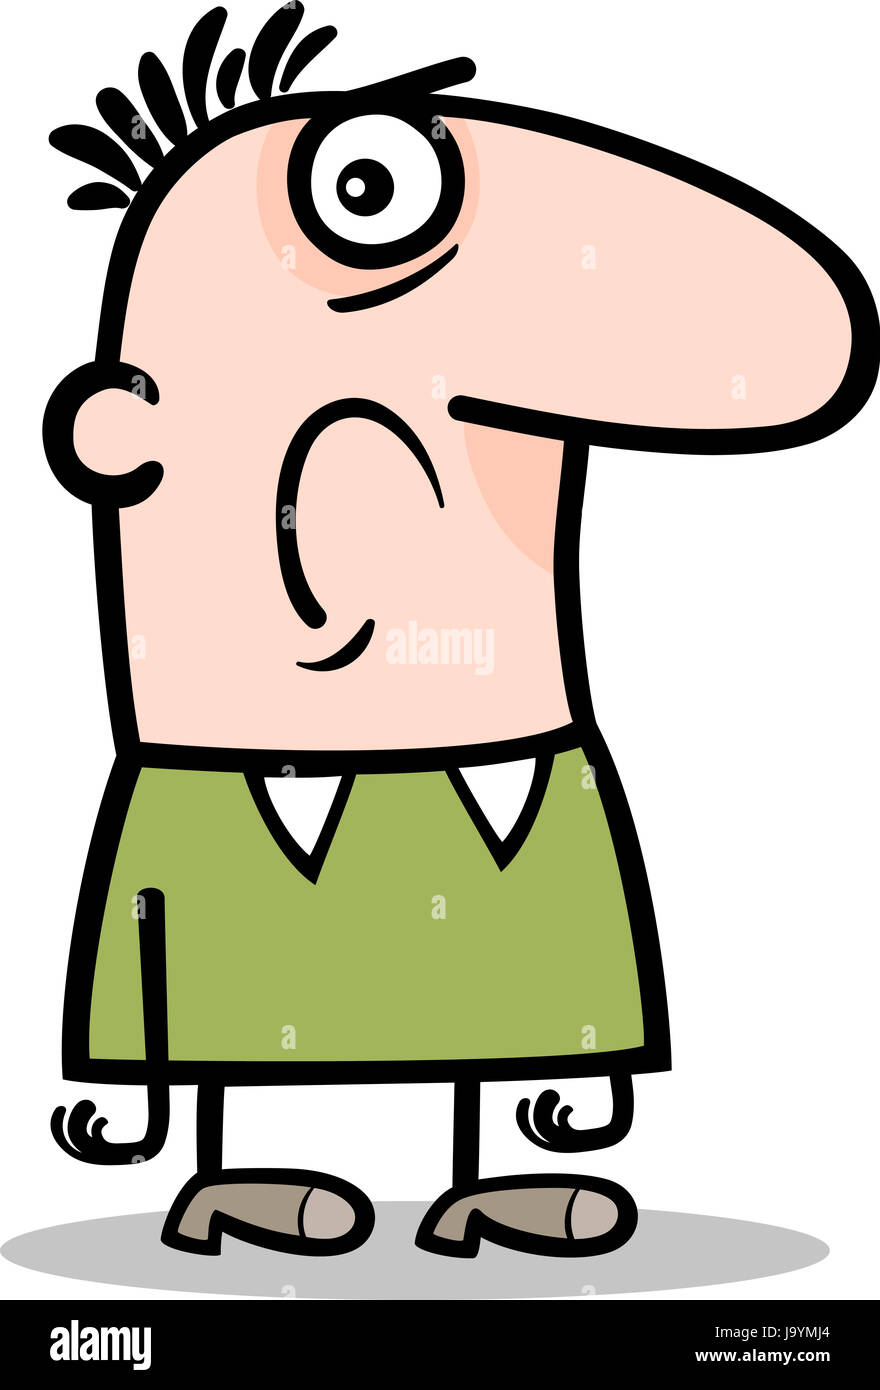 Cartoon Illustration of Sad or Unhappy Man Comic Character Stock Photo -  Alamy